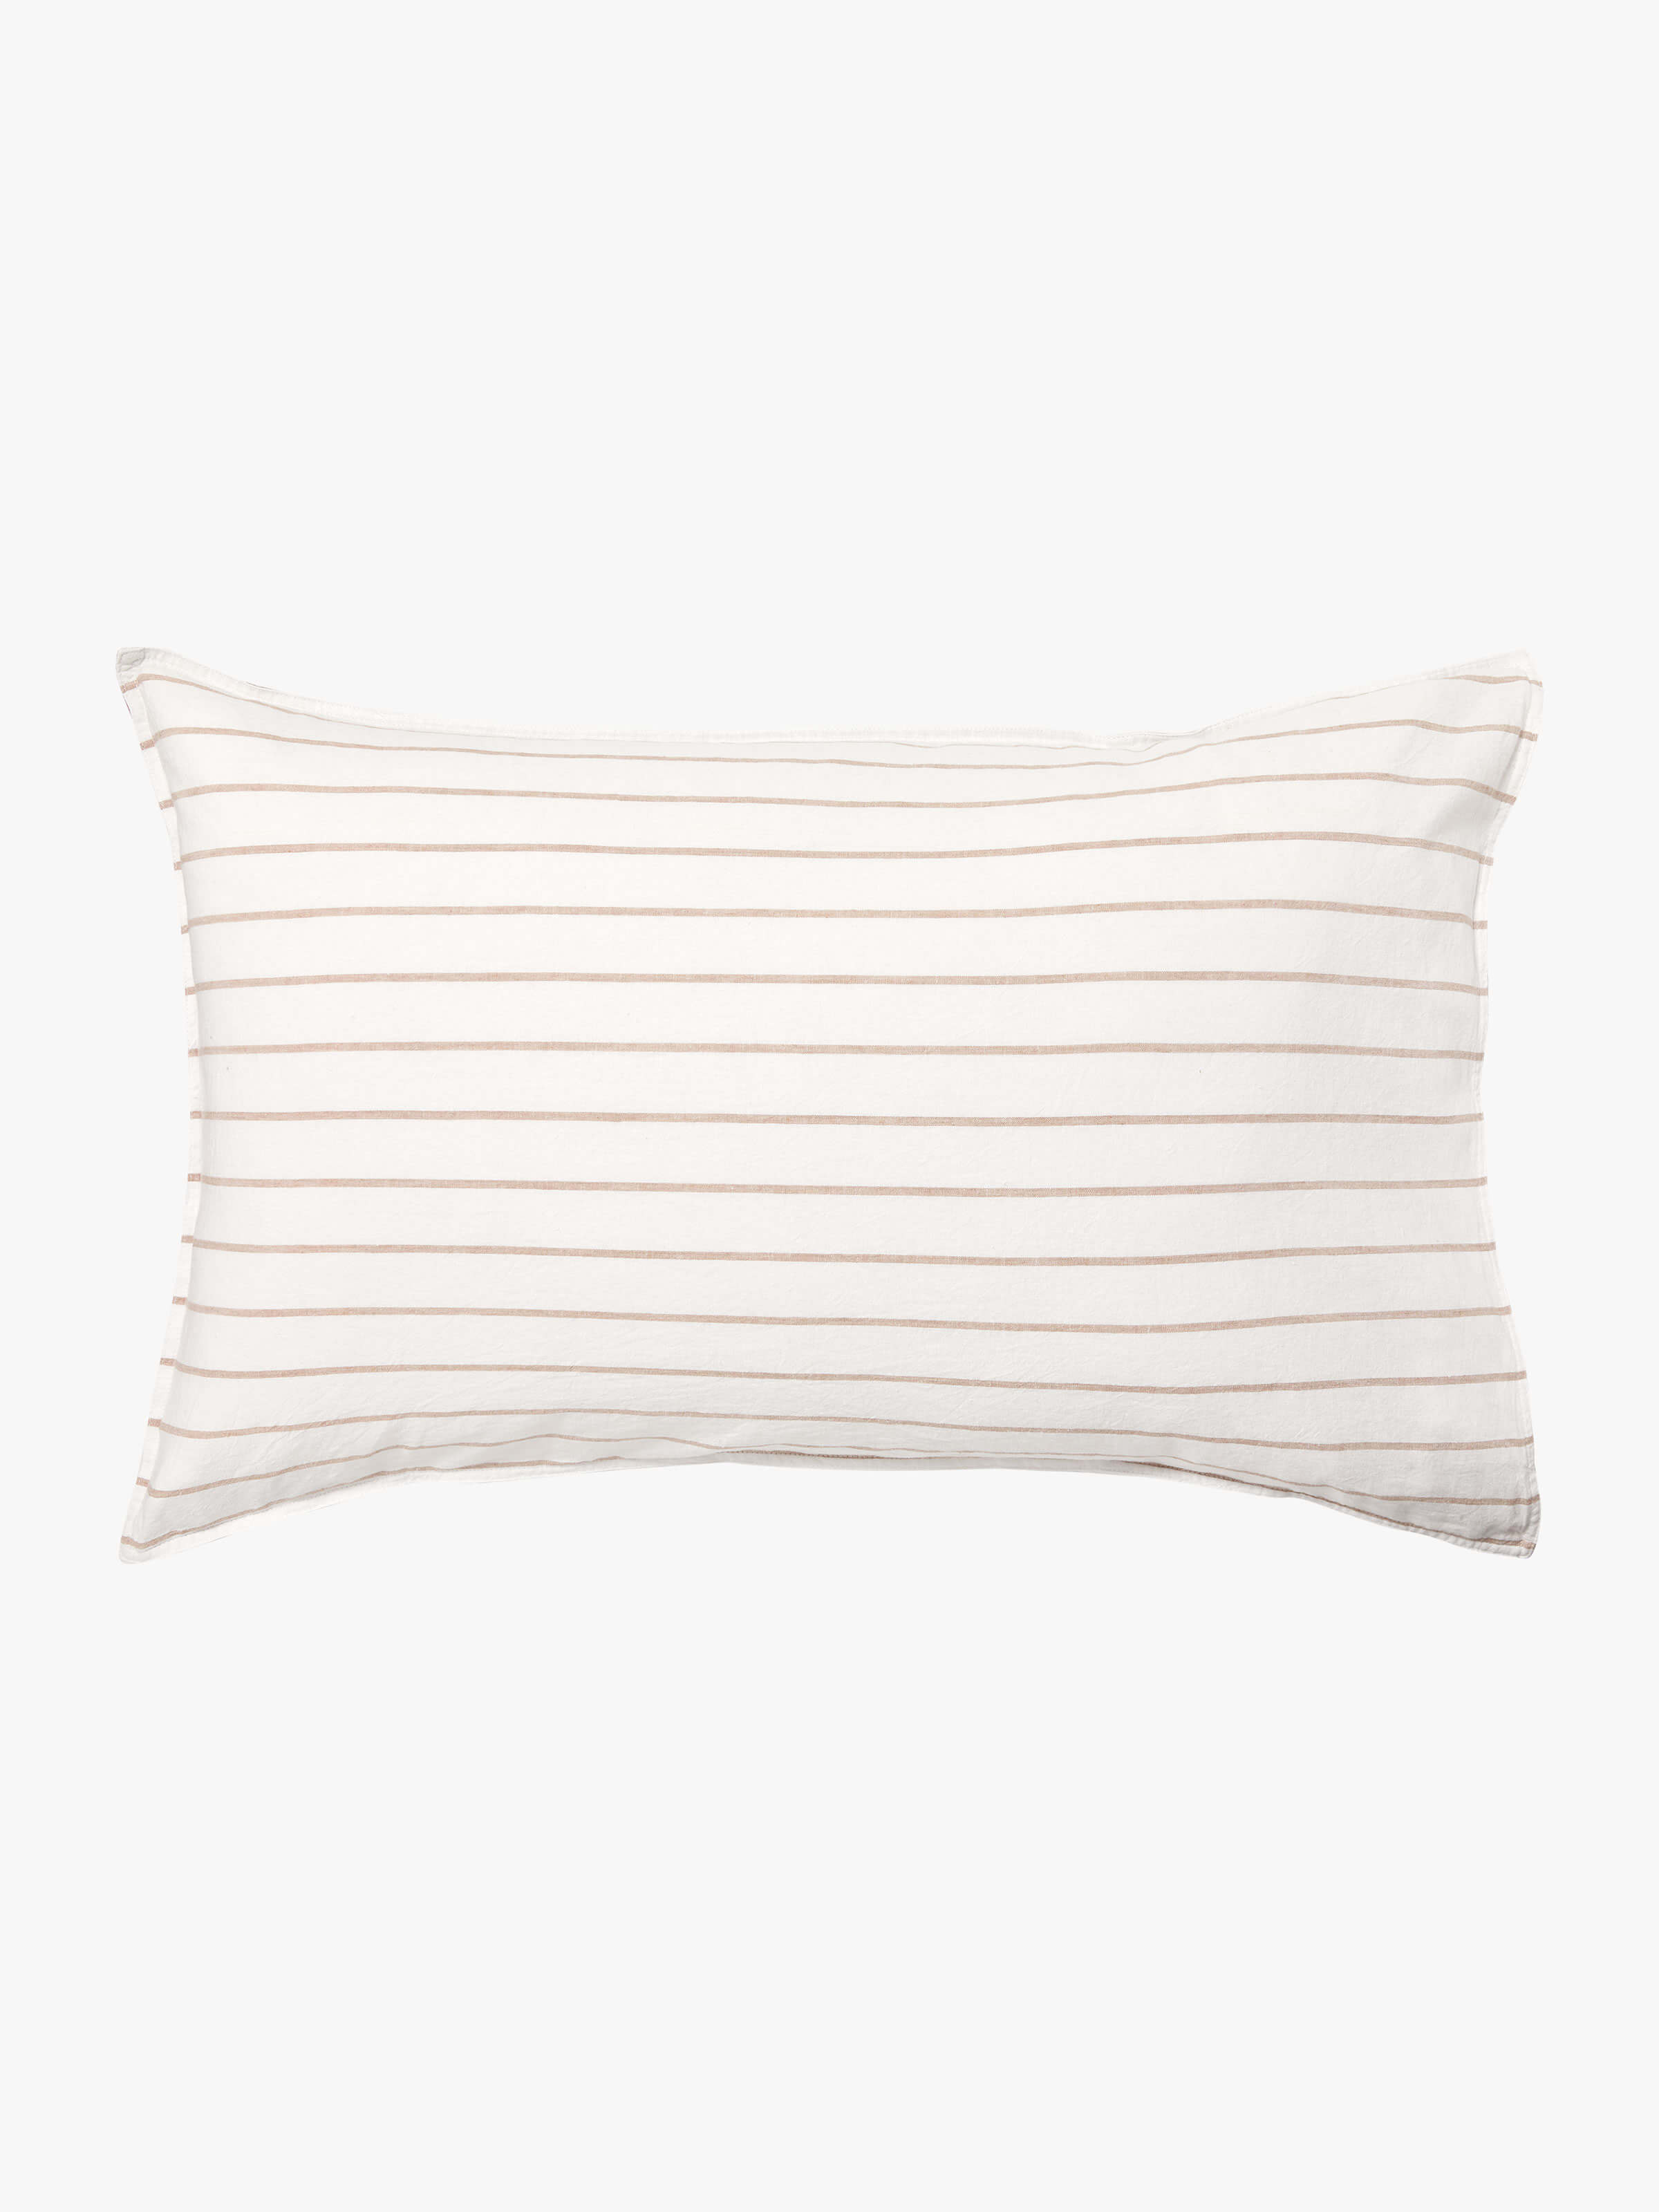 Loft Tan Linen & Cotton Pillowcases